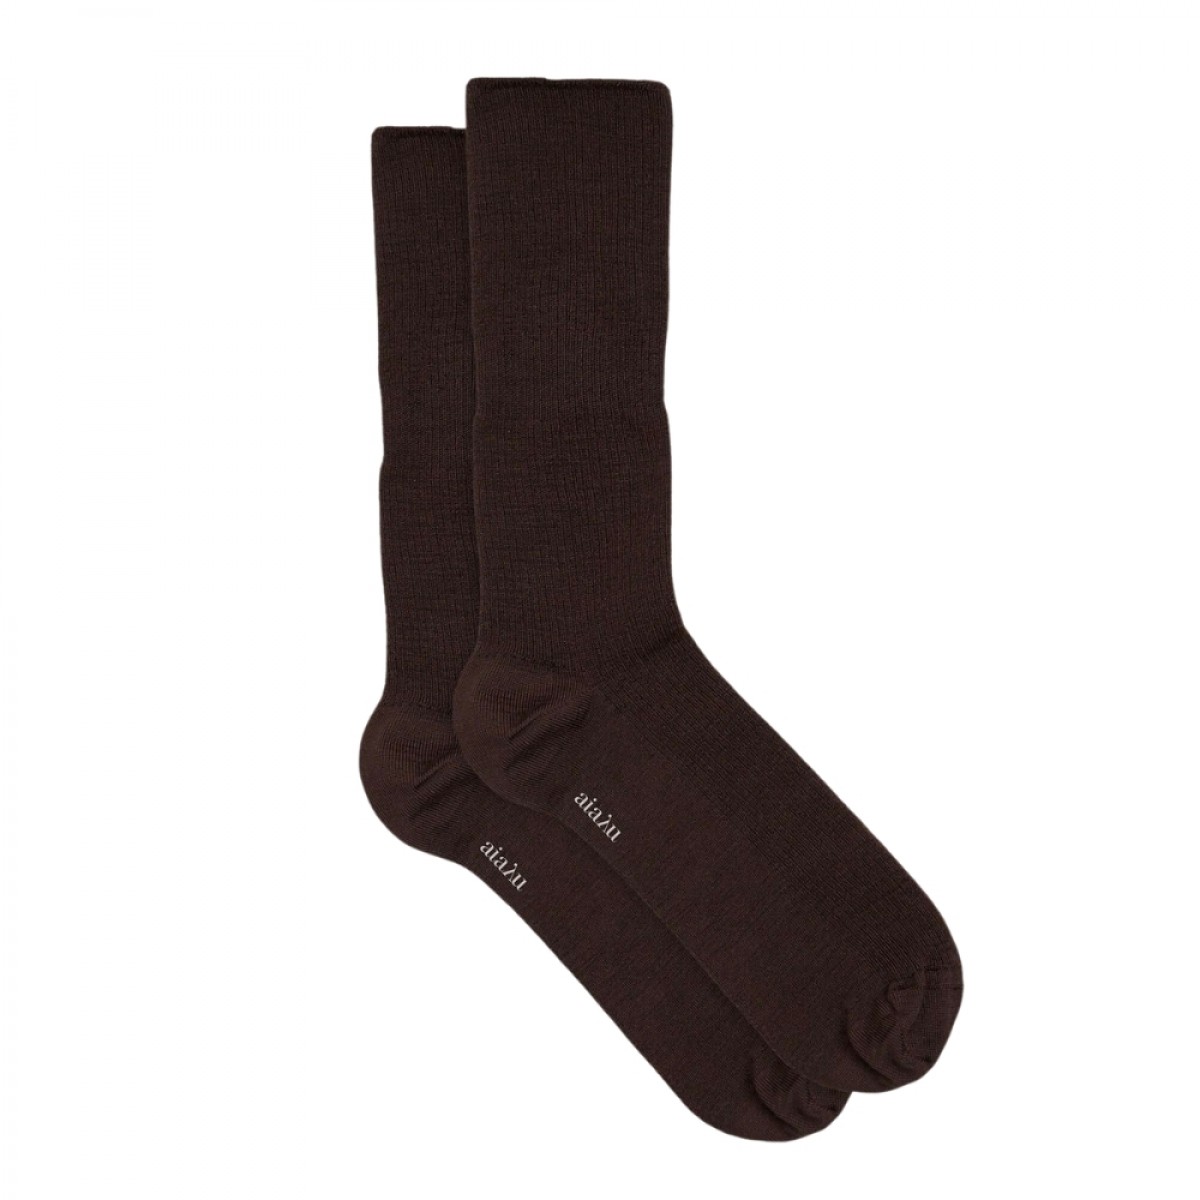 wool rib socks - brown - front